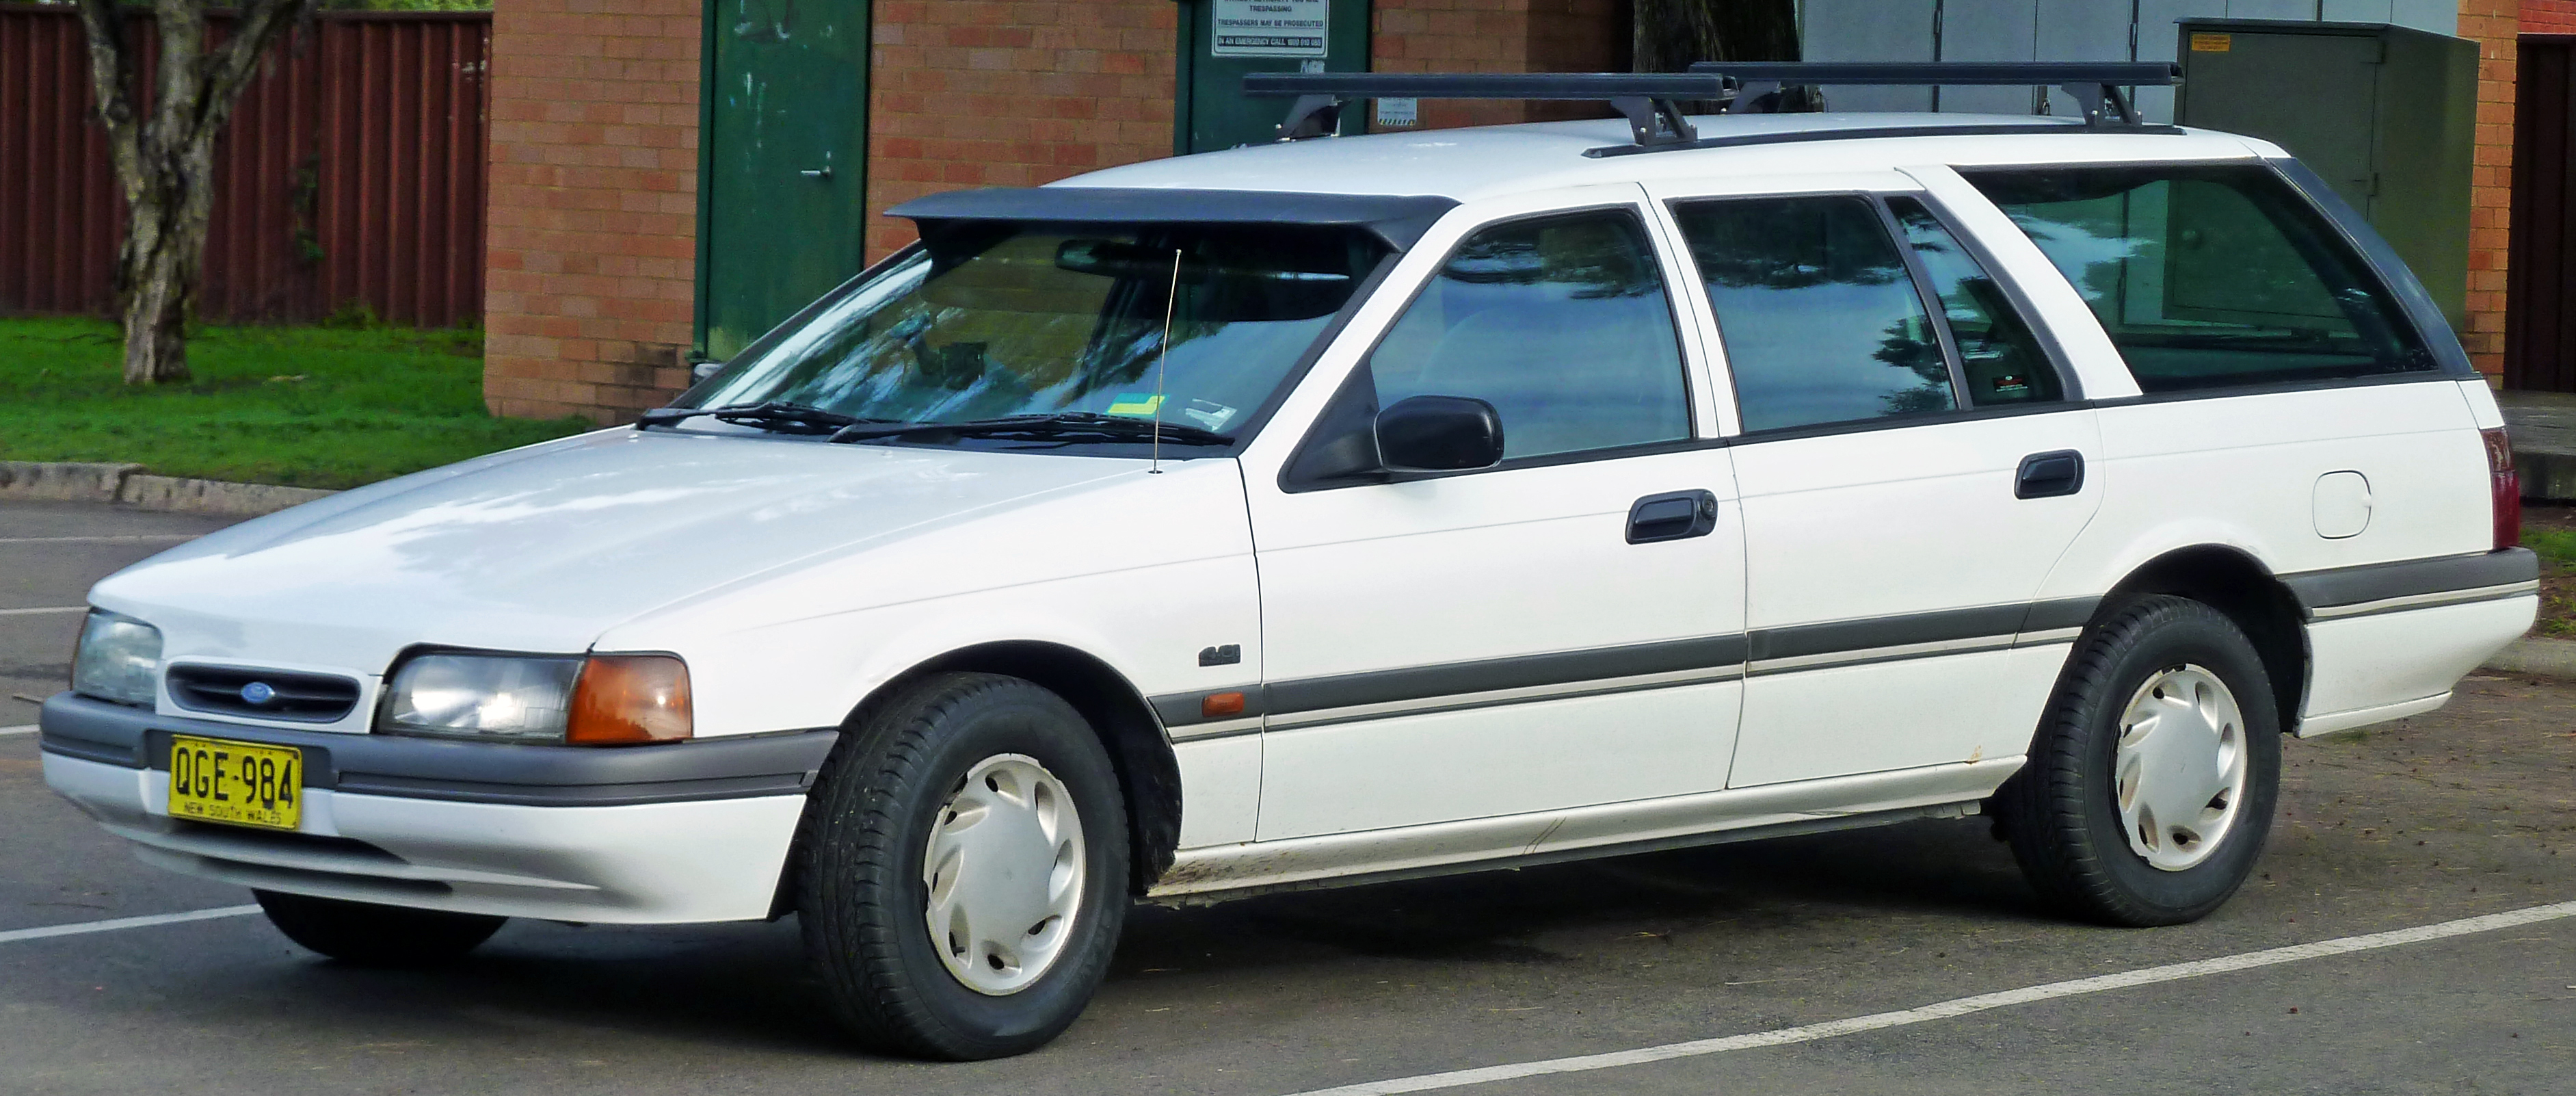 1994 Ford station taurus wagon #5